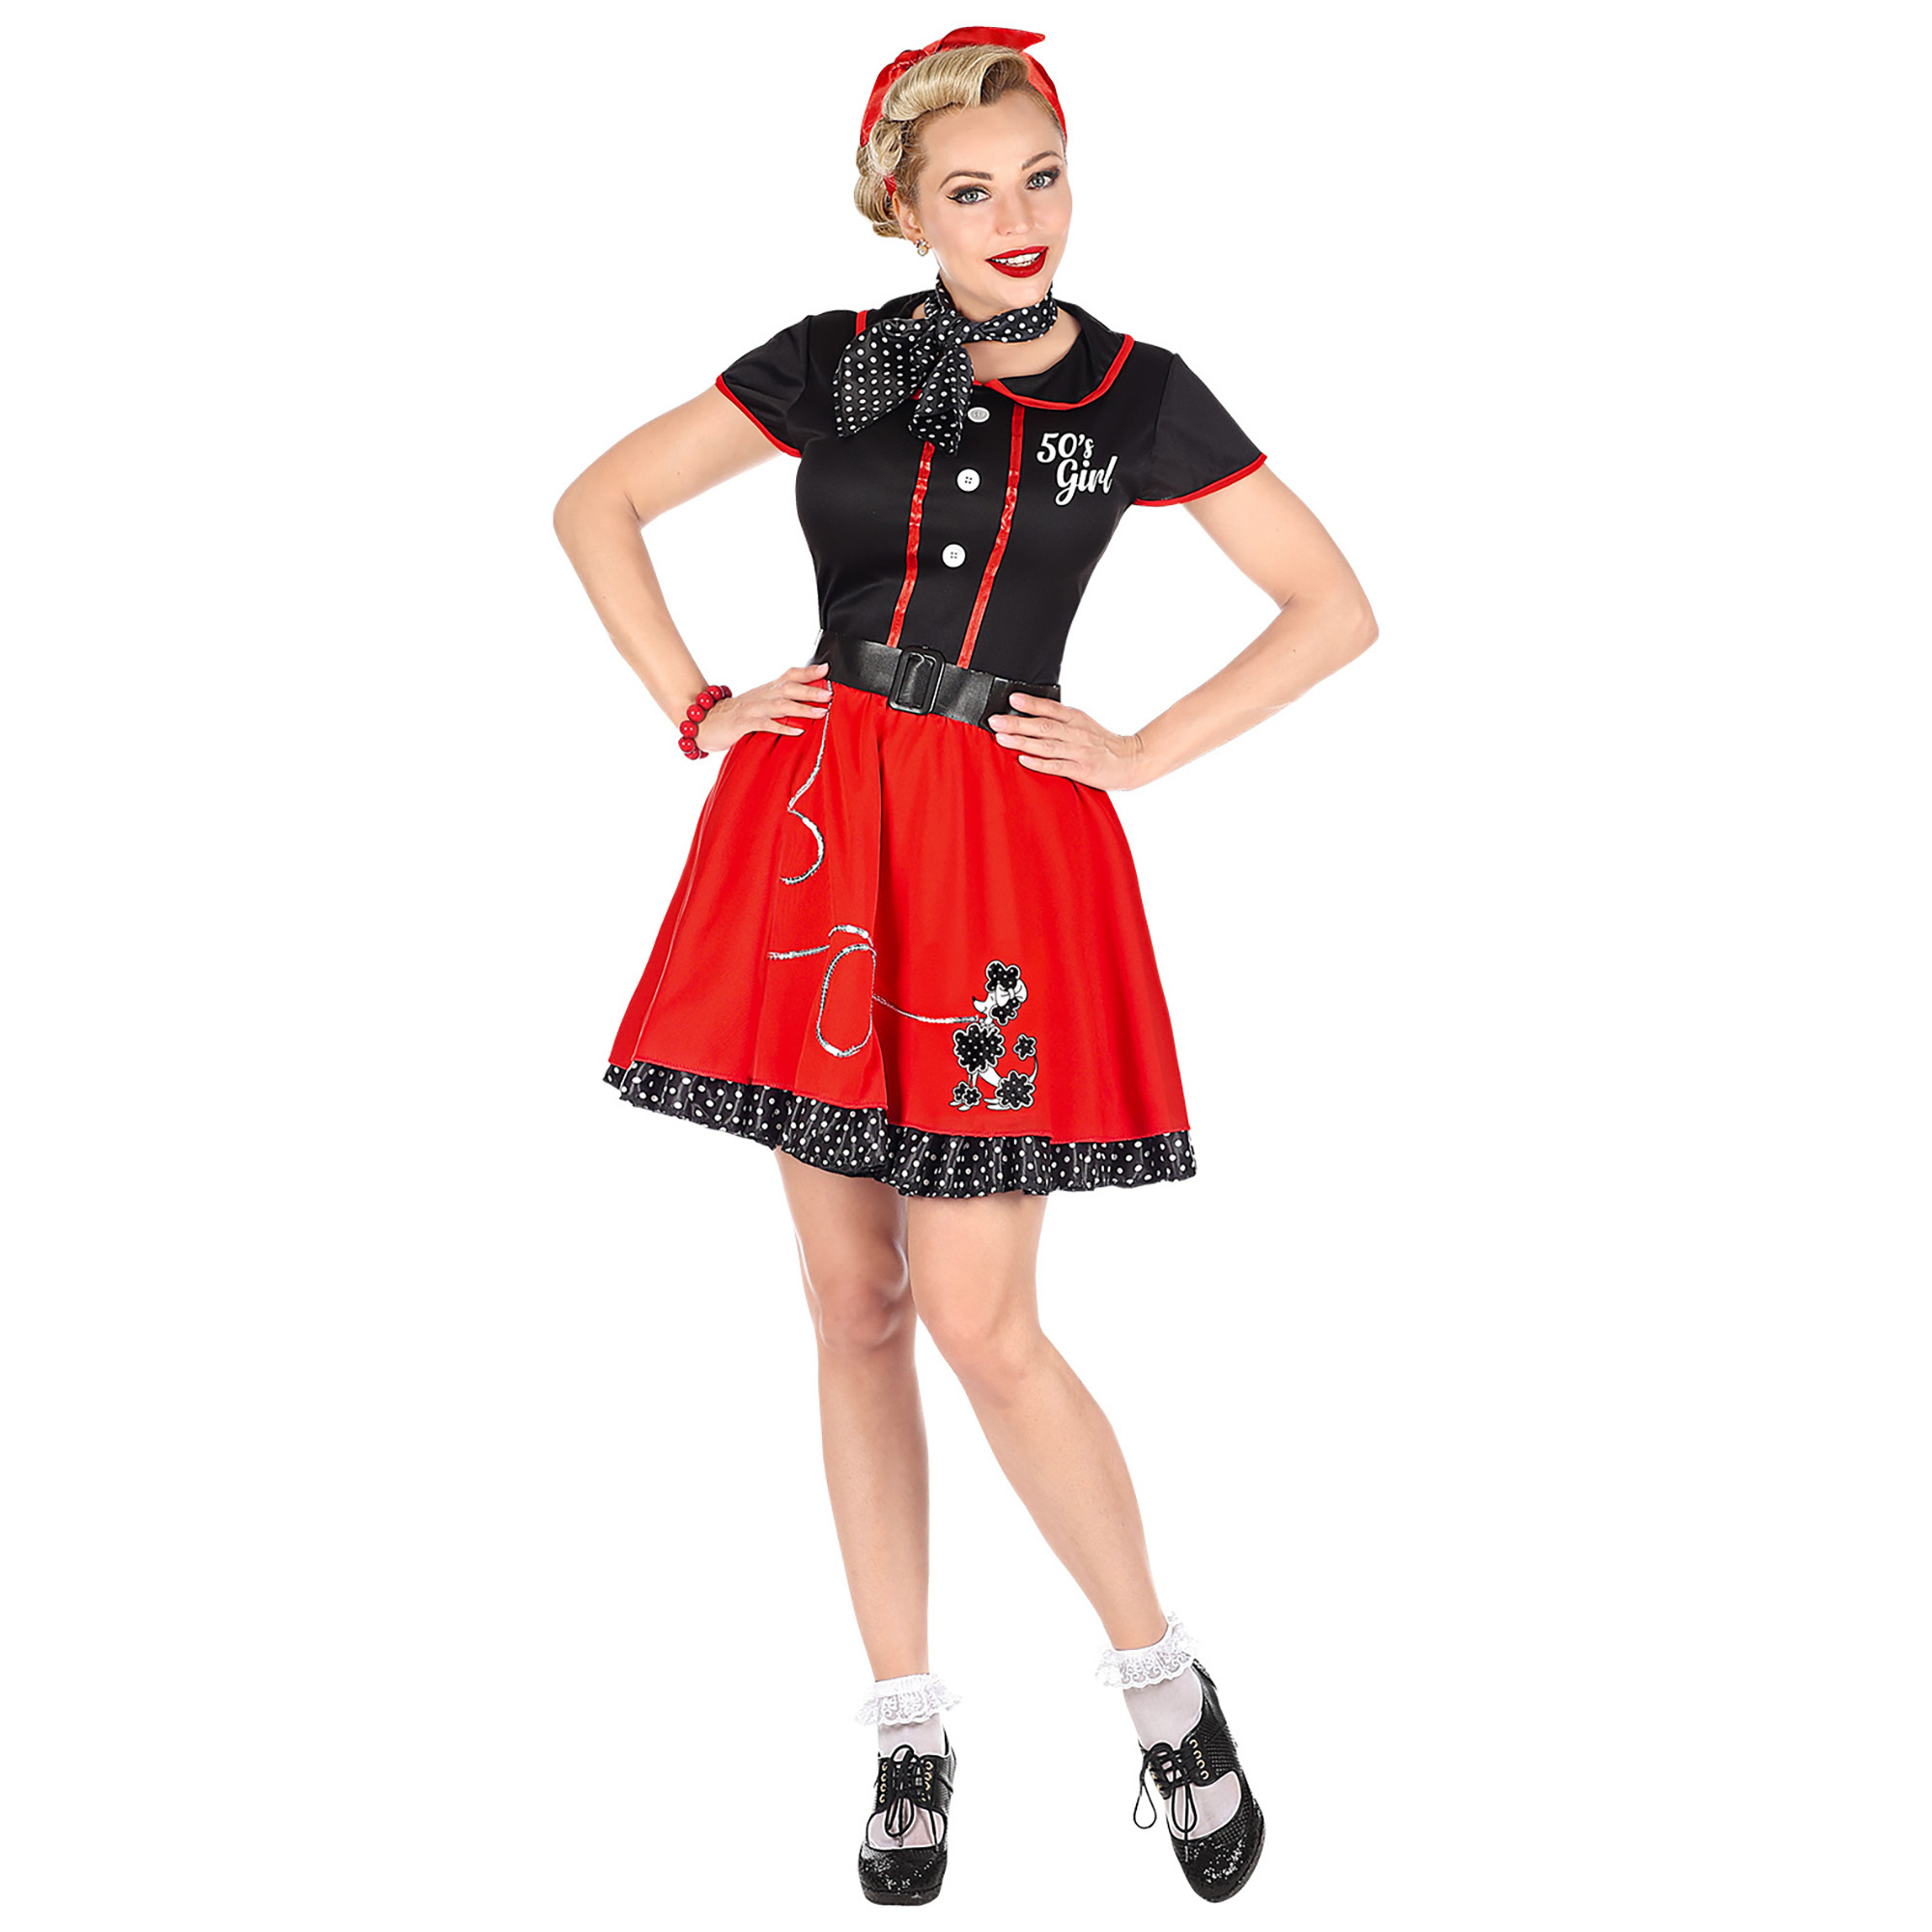 Retro dames jurk jaren 50  zwart rood 